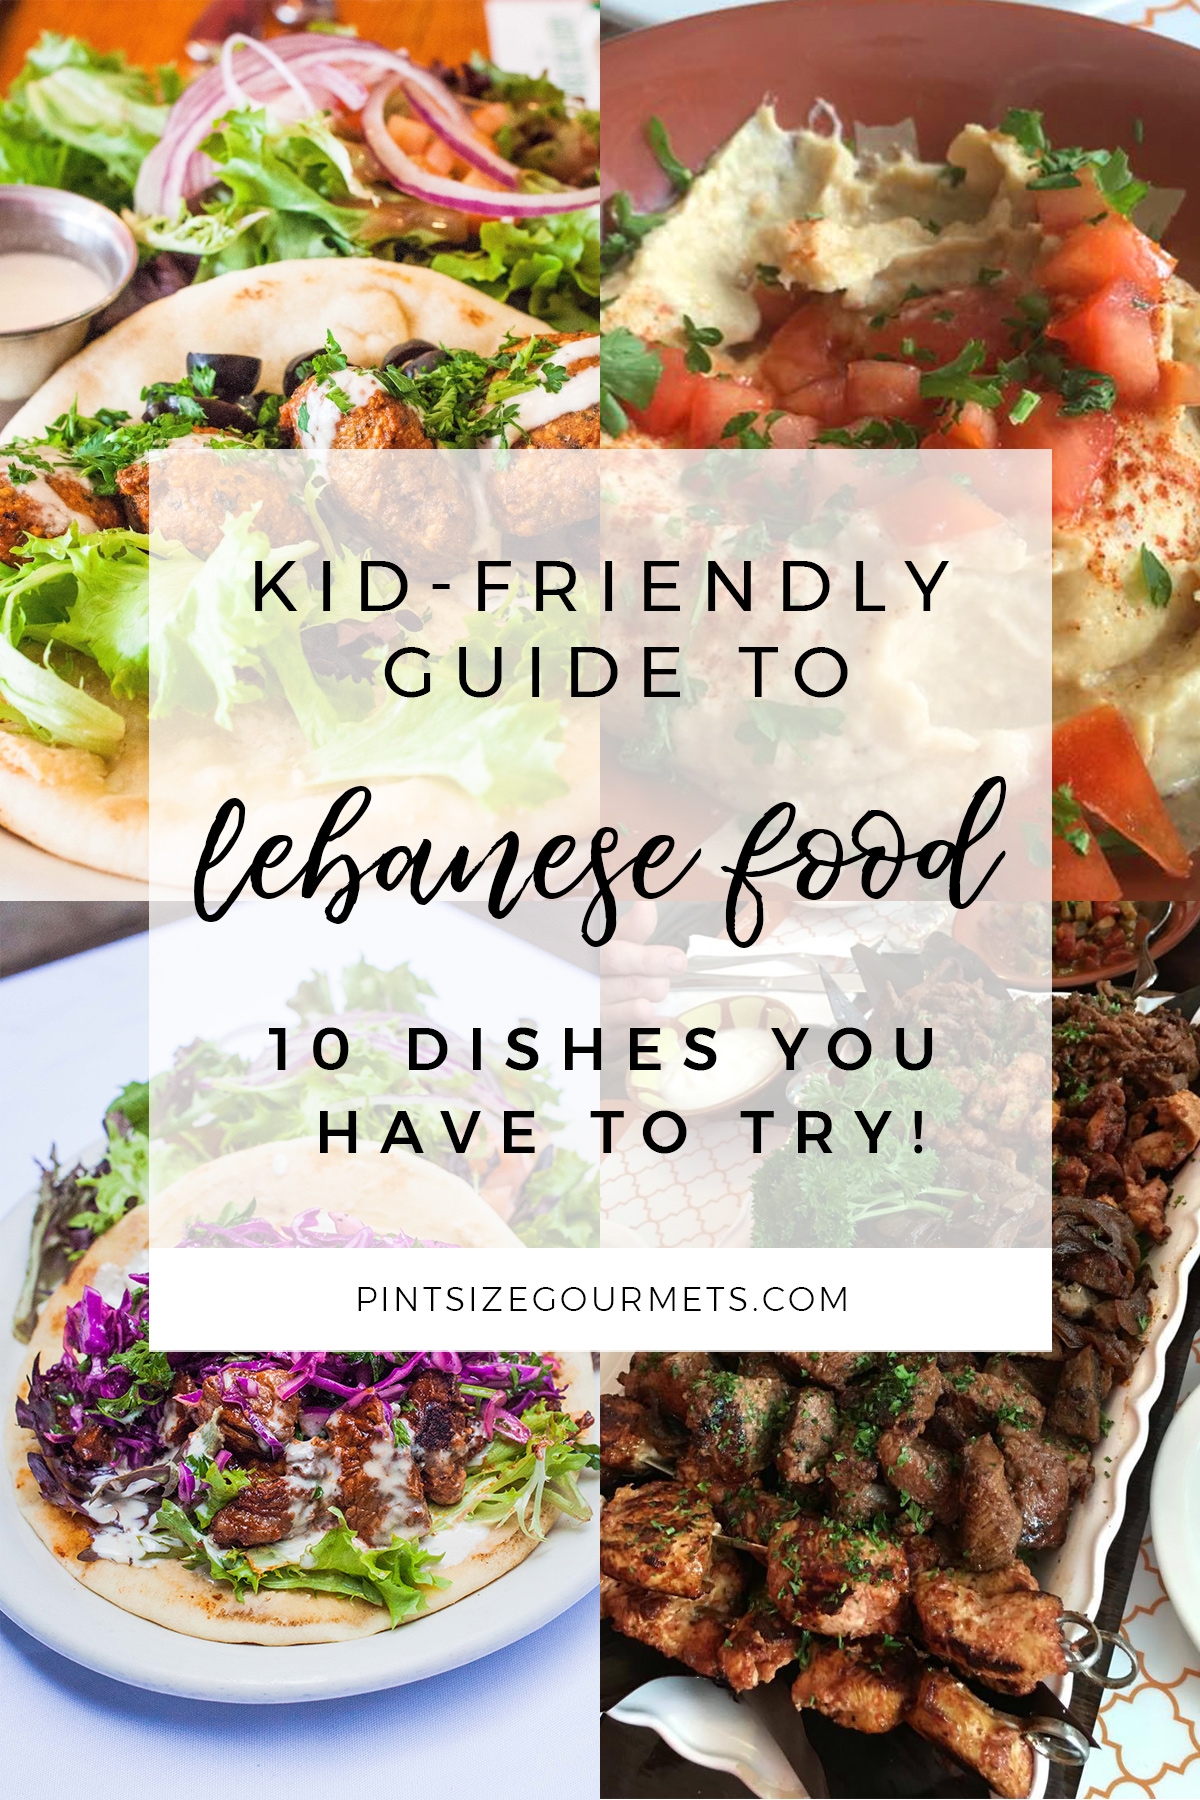 Kid-Friendly Guide to Lebanese Food